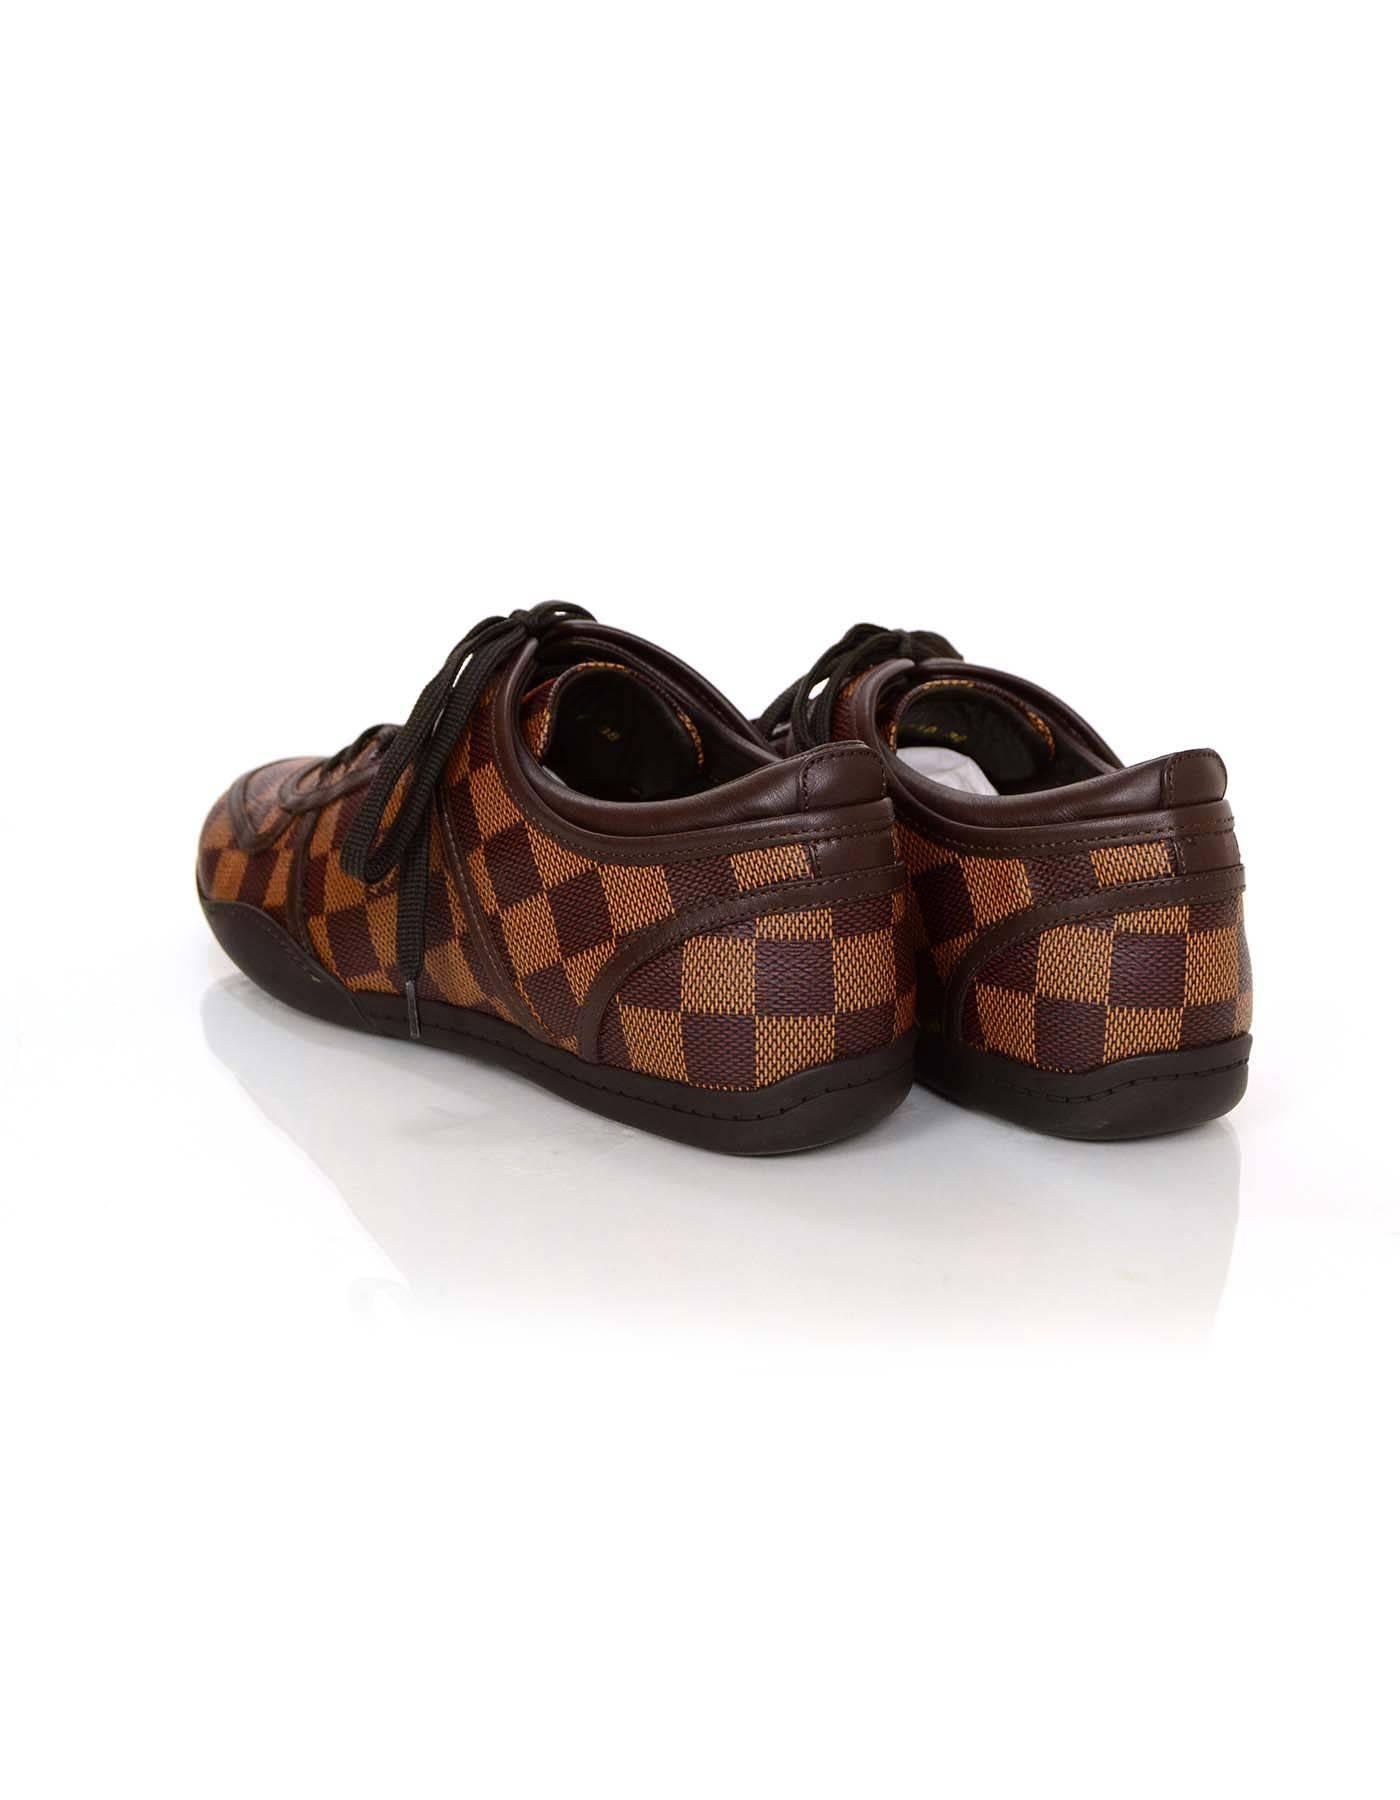 Louis Vuitton Damier Boogie Sneakers Sz 38 1